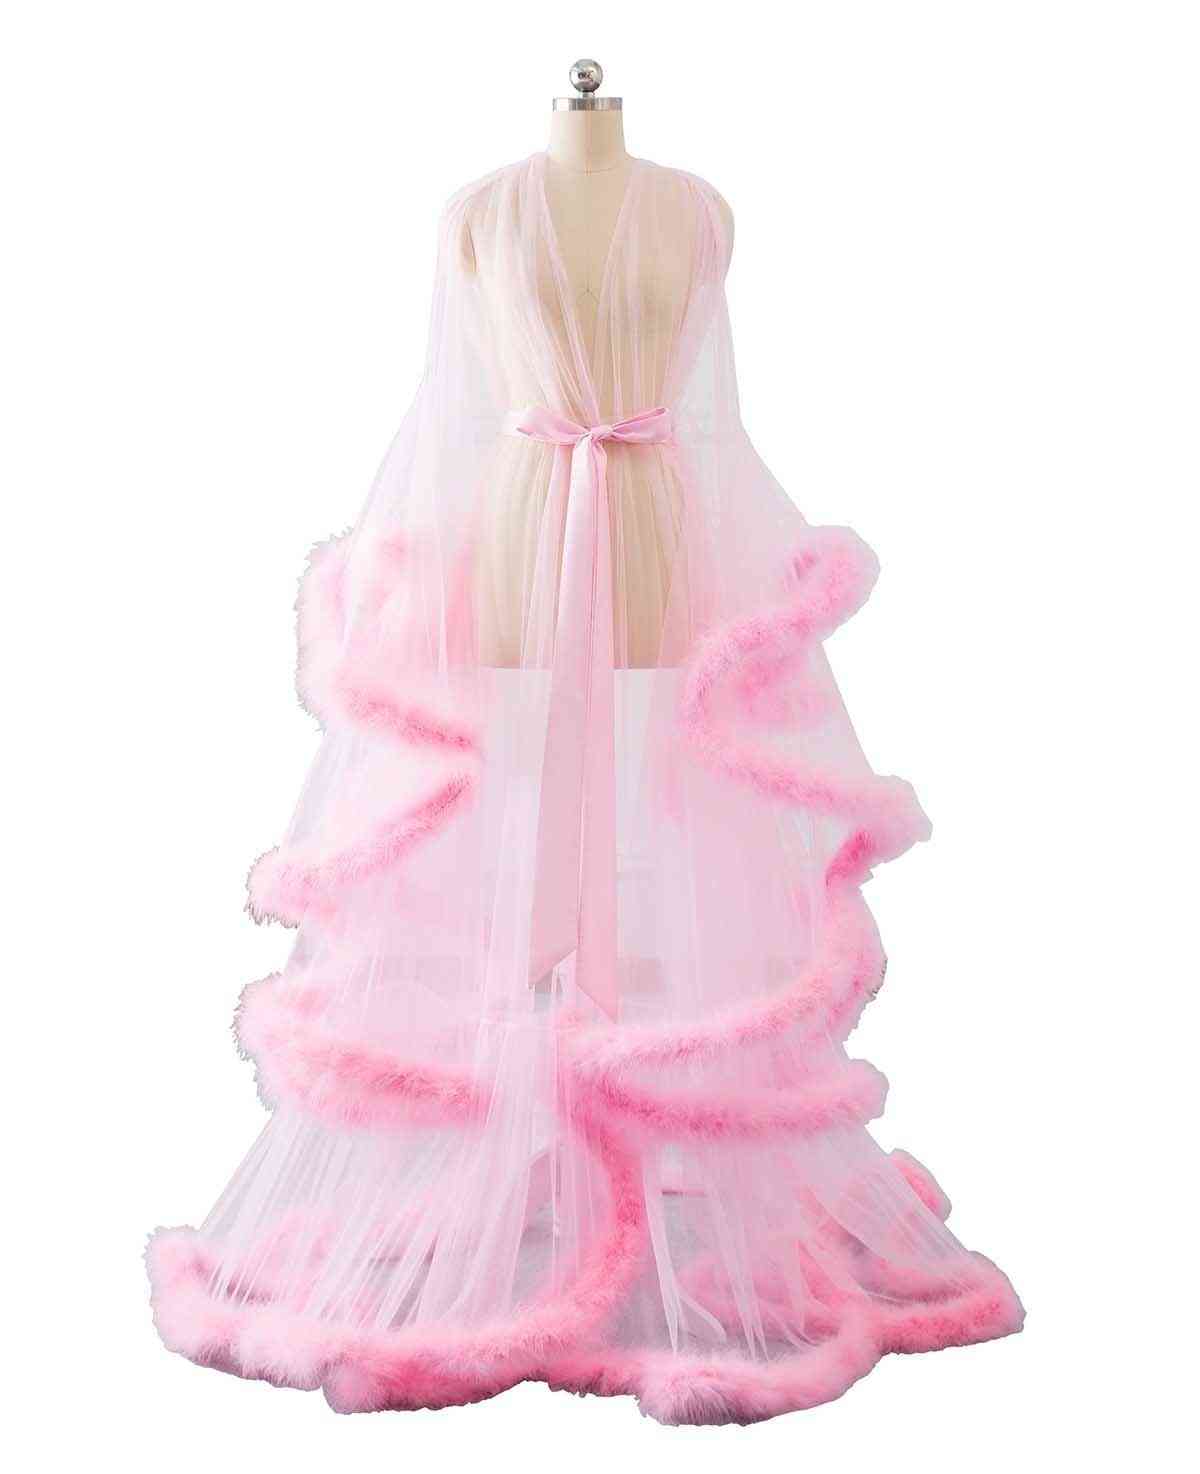 Bridal Boudoir, Feather Trim Sheer, Tulle Illusion, Long Robe Dress Set-3